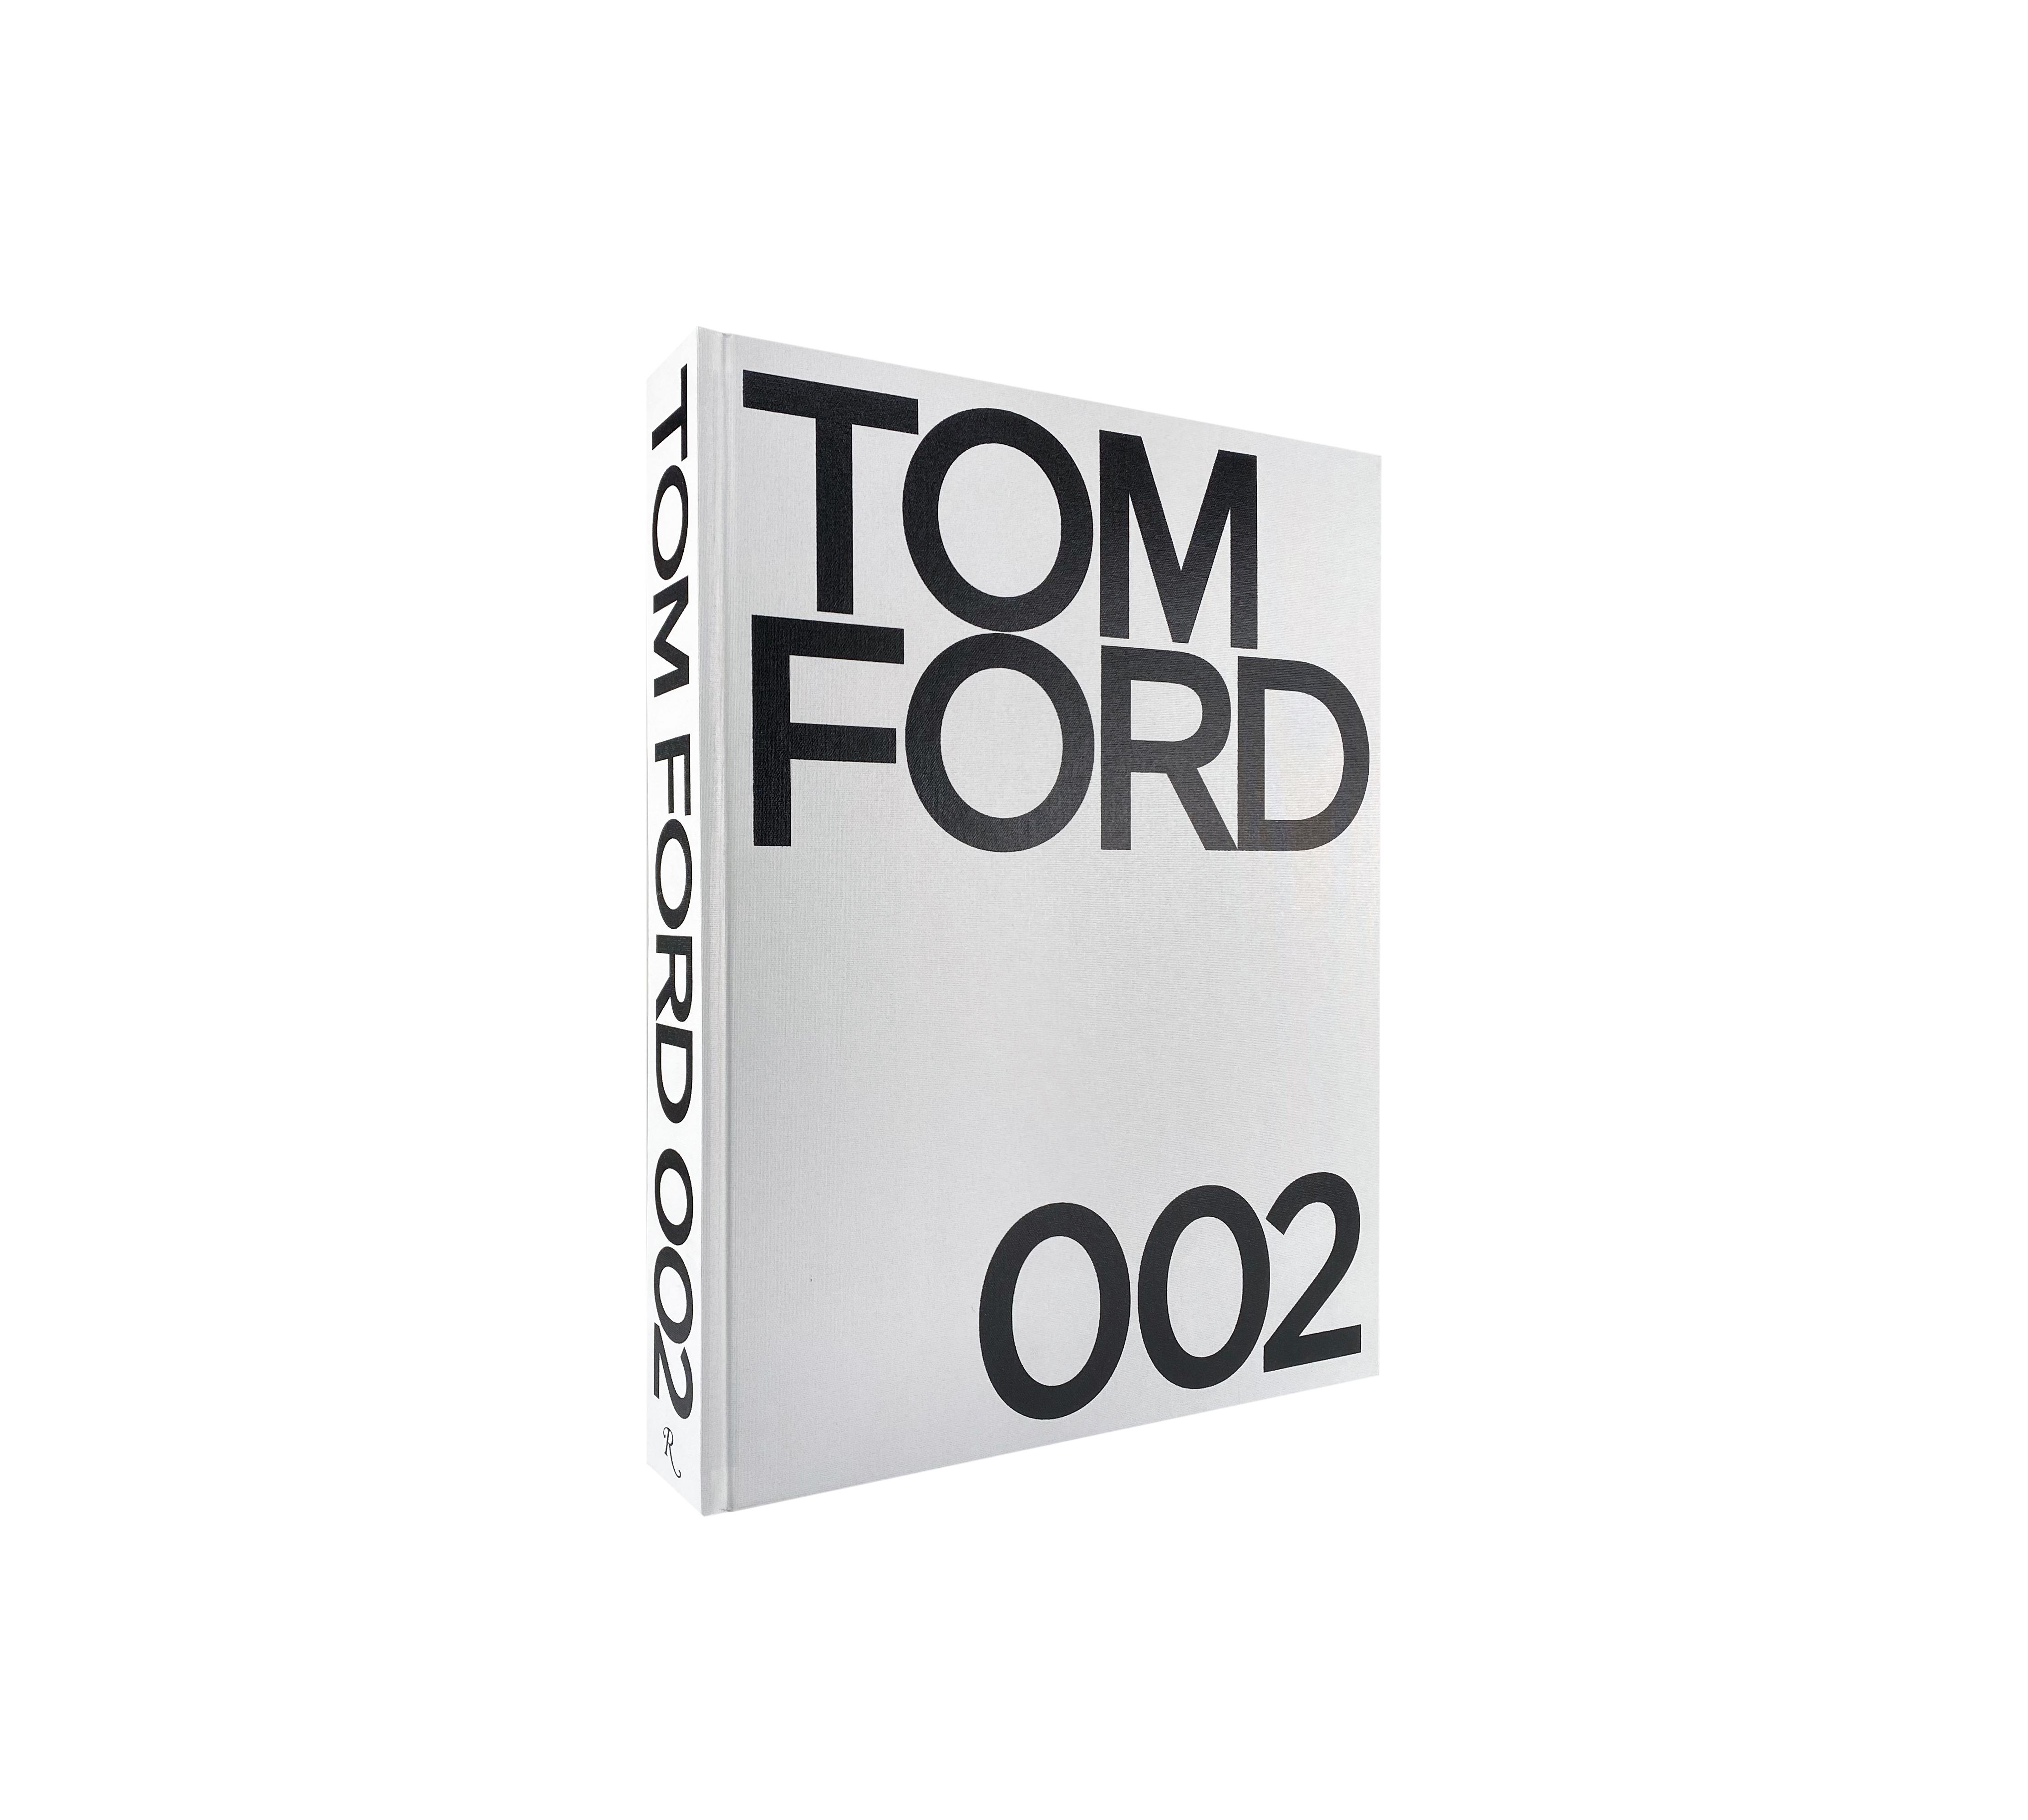 Tom Ford TOM FORD BOOK 002 REGULAR | TomFord.com